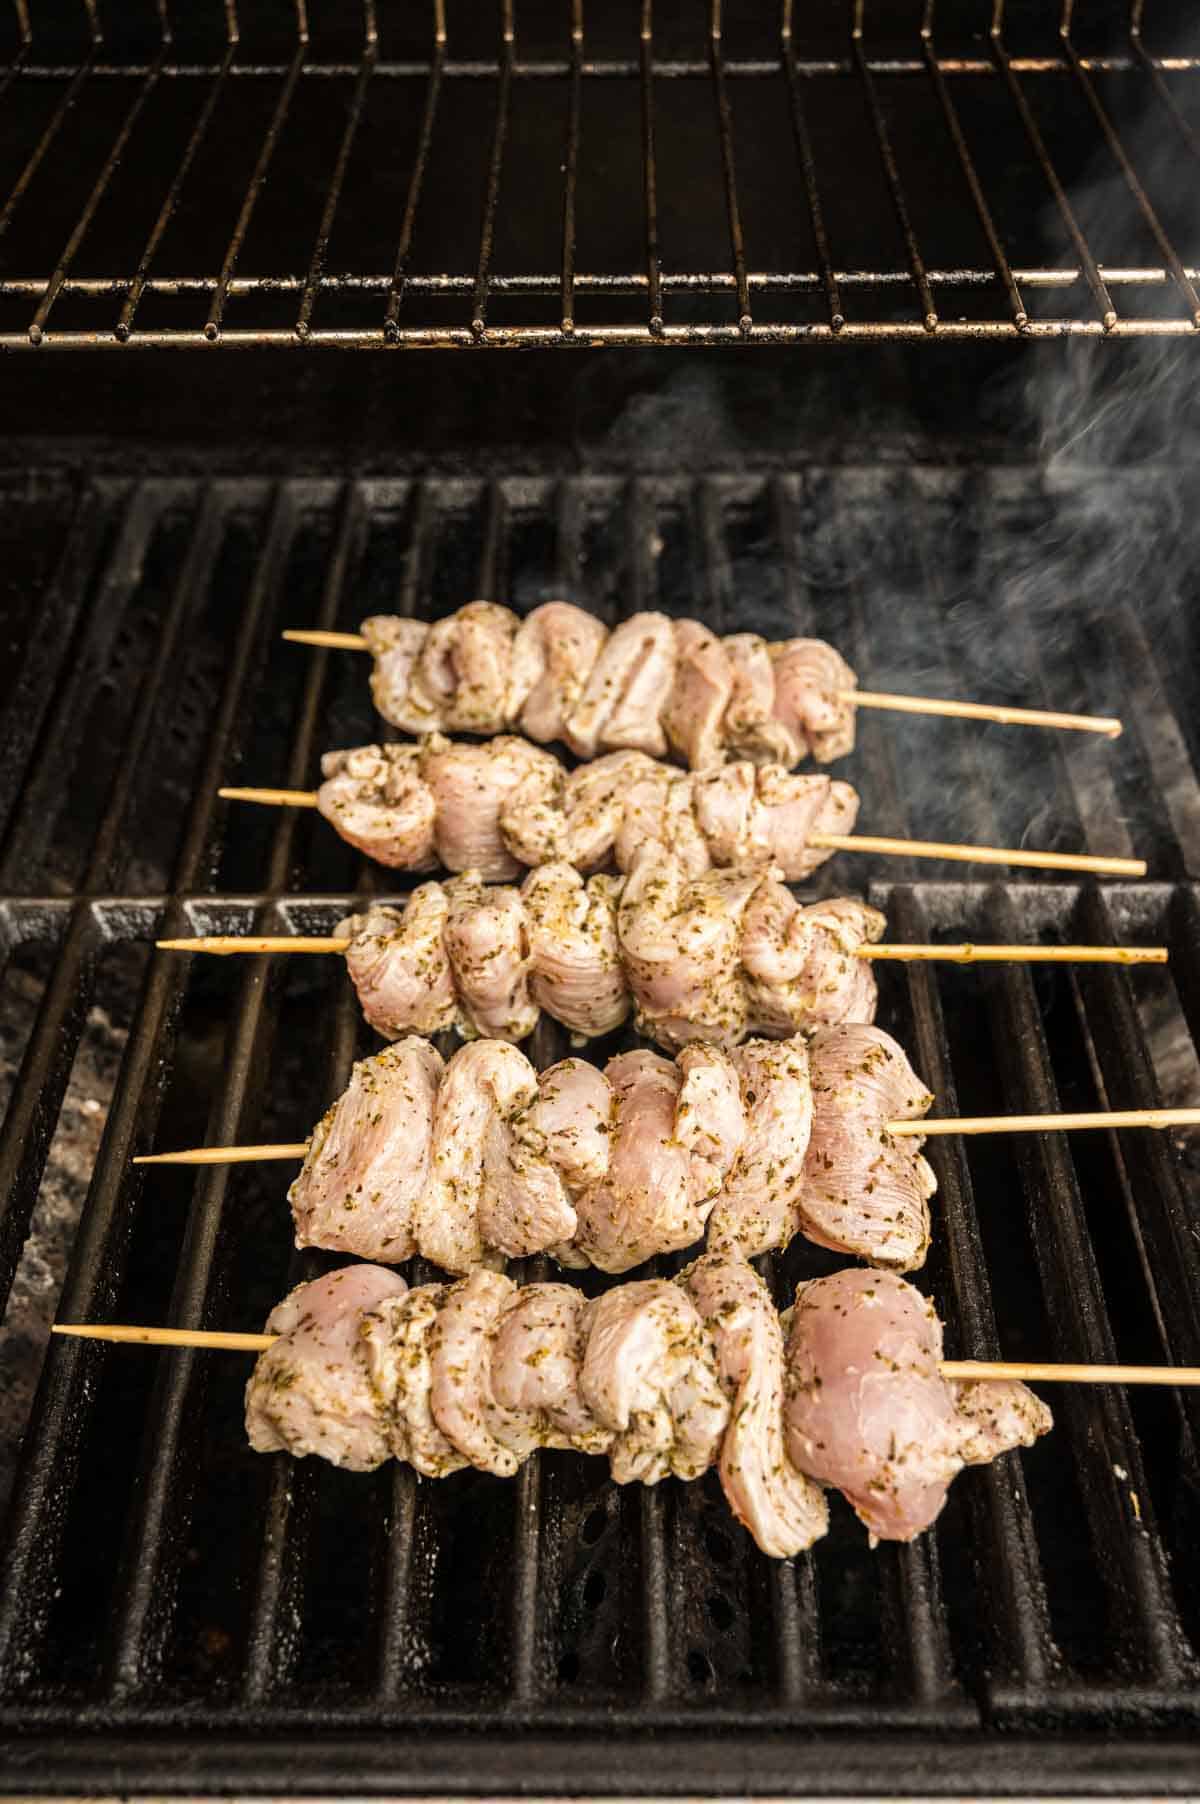 Five Greek Chicken Skewers Smoking Away on a High-Heat Grill